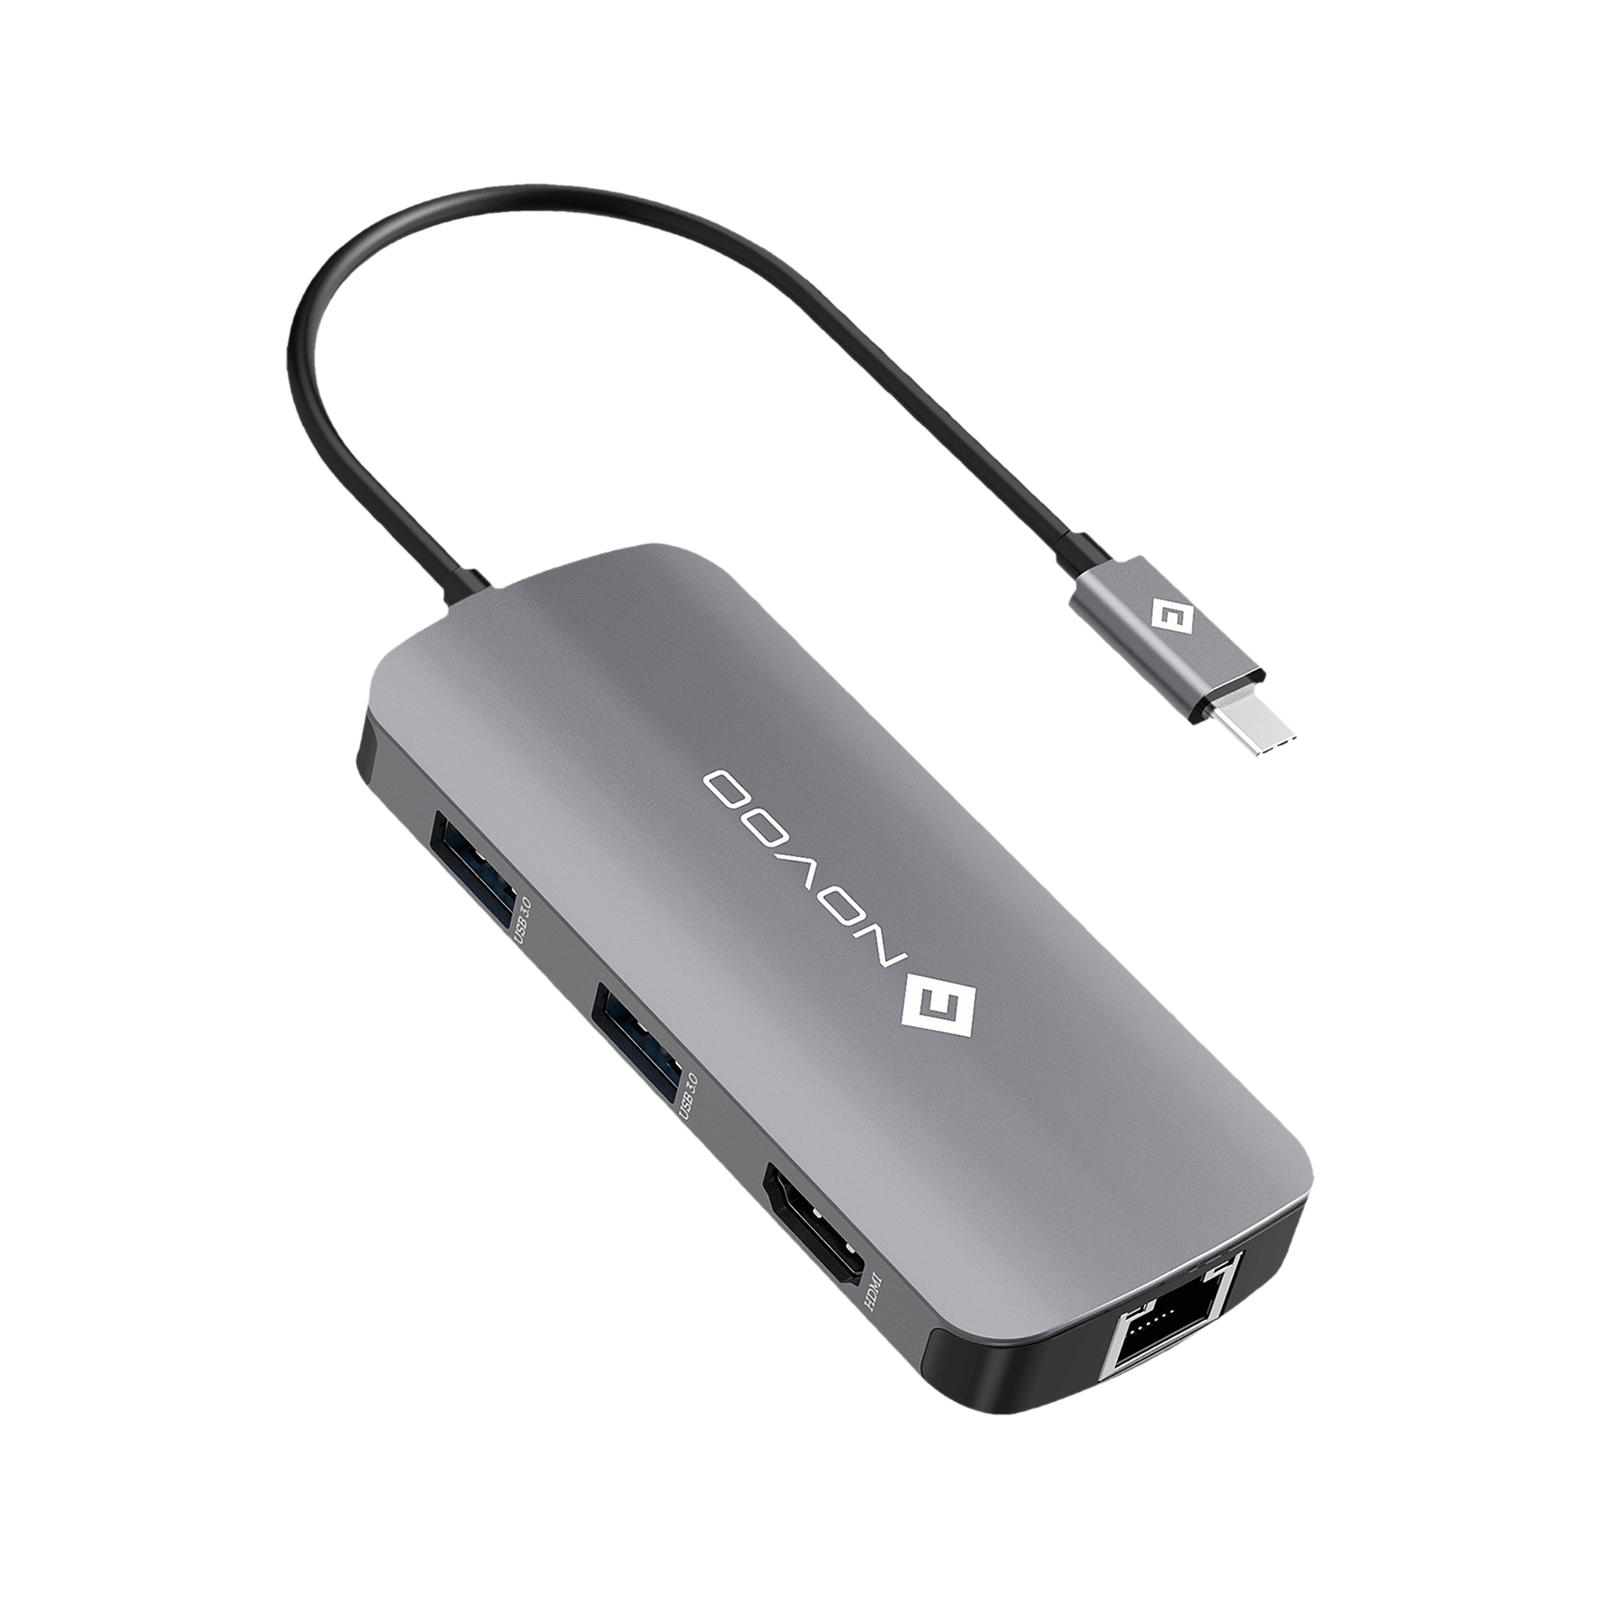 NOVOO 7-in-1 USB 3.0 Type C to USB 2.0 Type C, USB 2.0 Type A, USB 3.0 Type A, HDMI, LAN Port USB Hub (Pass-Through Charging, Dark Grey)